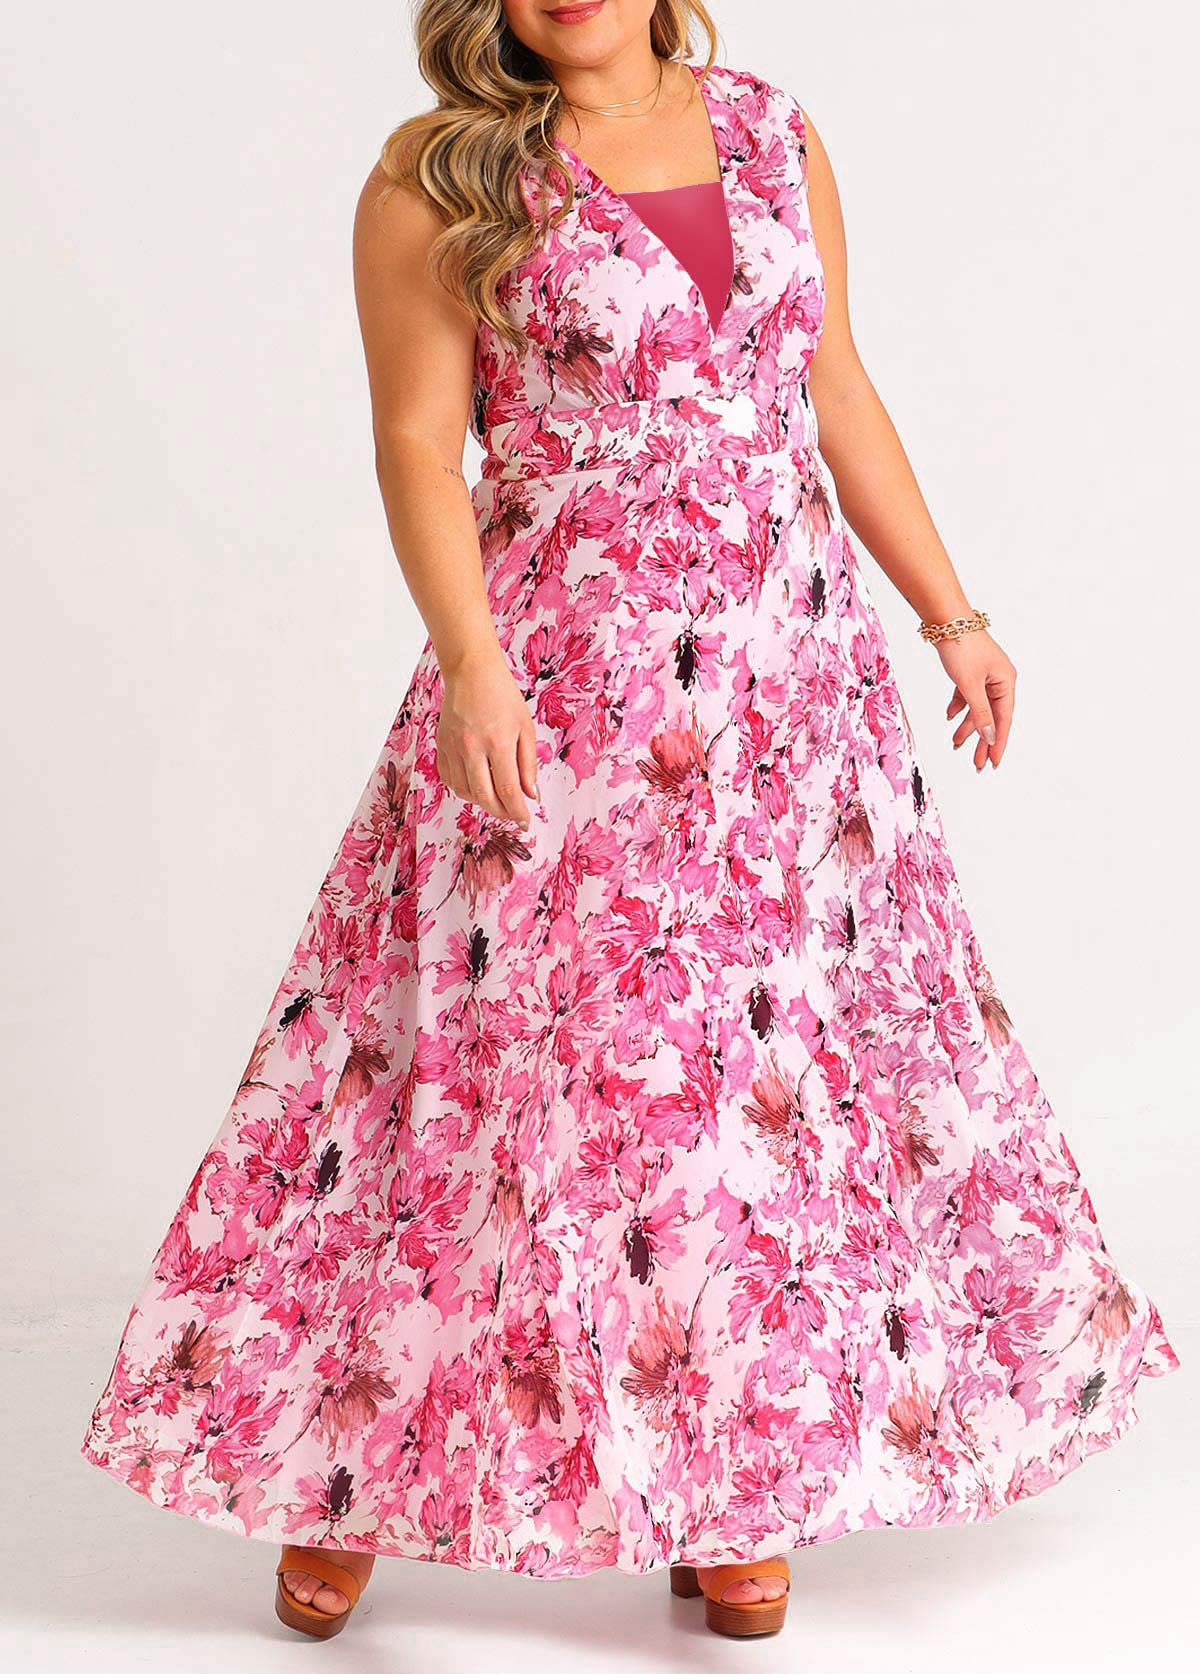 ROTITA Floral Print Chiffon Pink Sleeveless Plus Size Dress